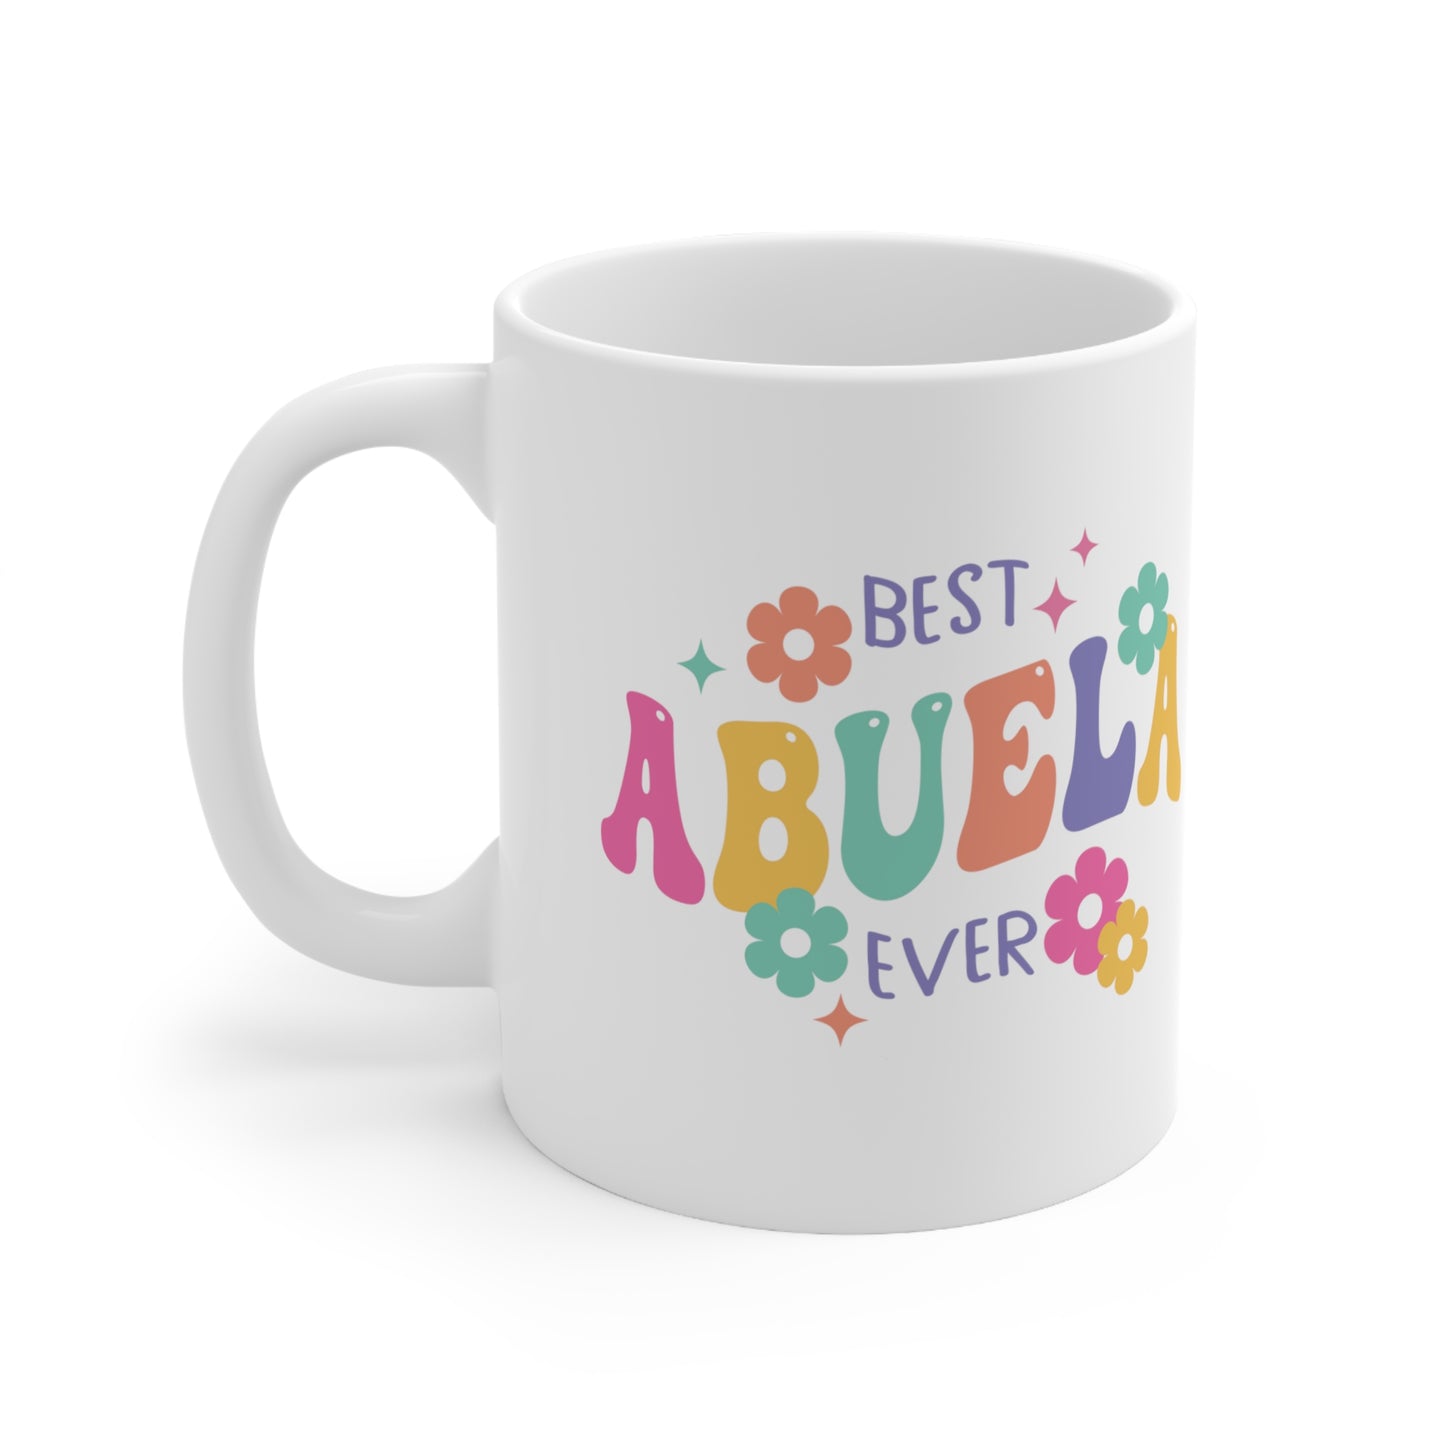 Best Abuela Ever Ceramic Mug 11oz, Mothers Day Gifts